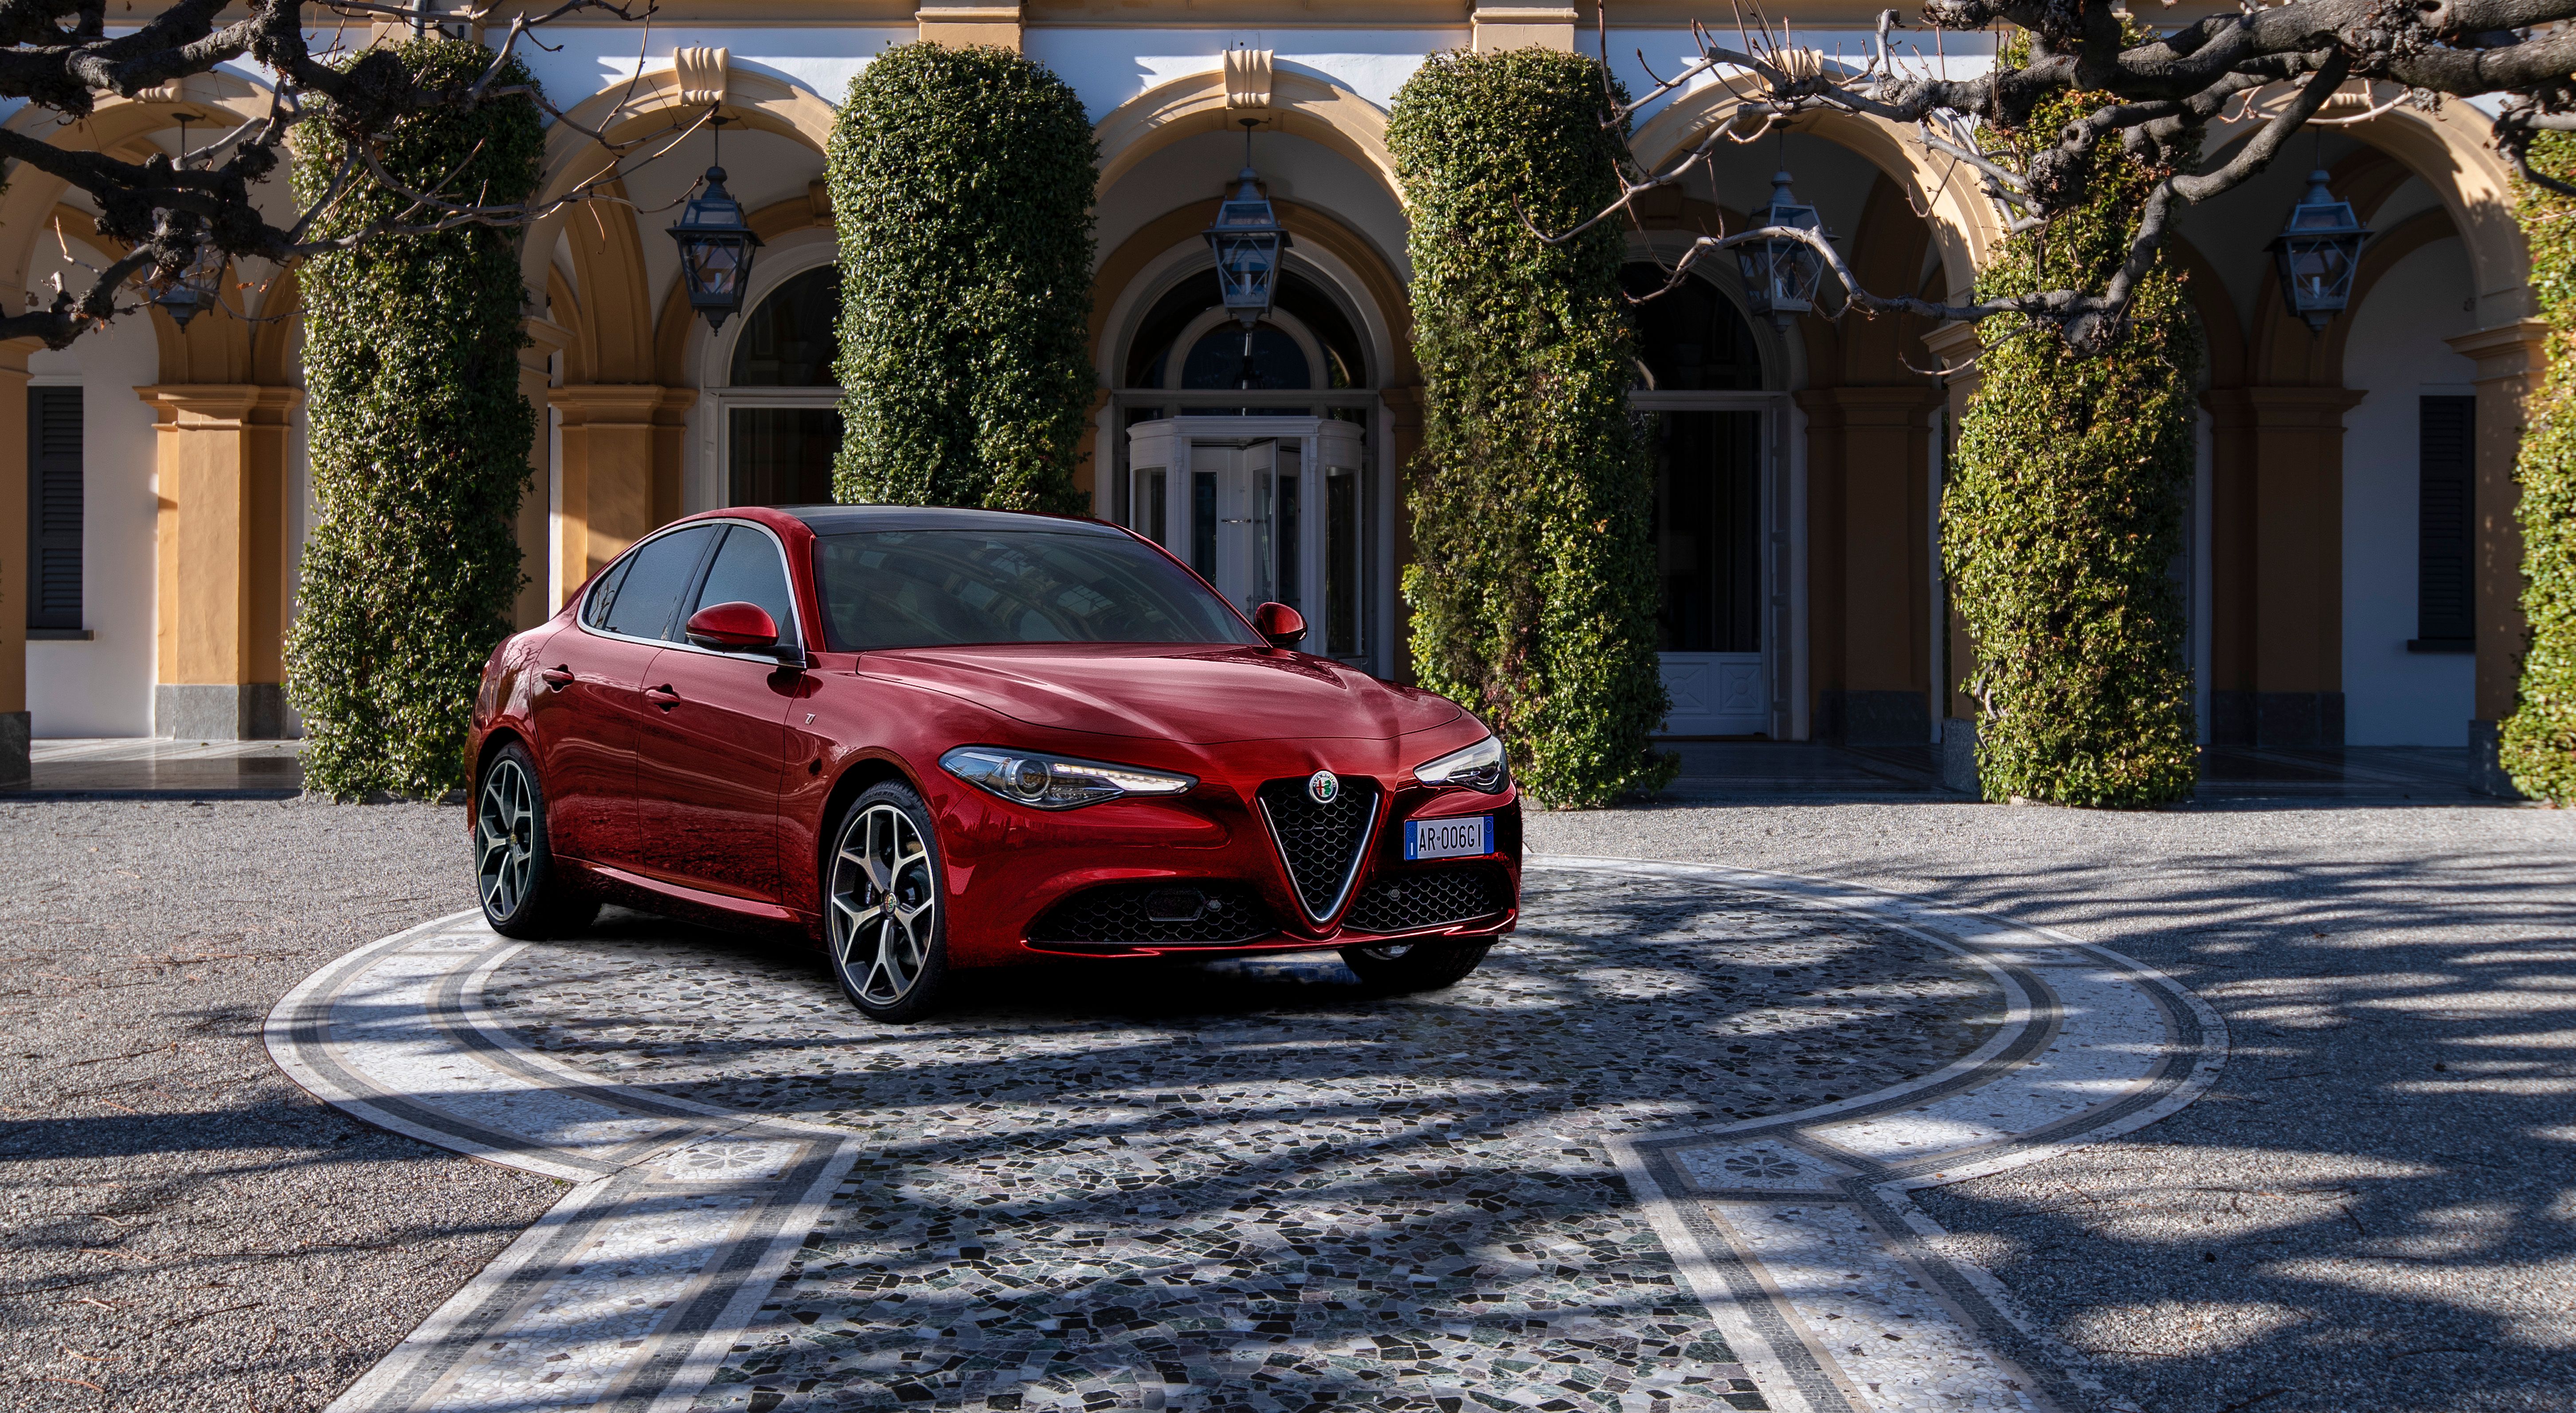 2021 Alfa Romeo Giulia and Stelvio ‘6C Villa d’Este’